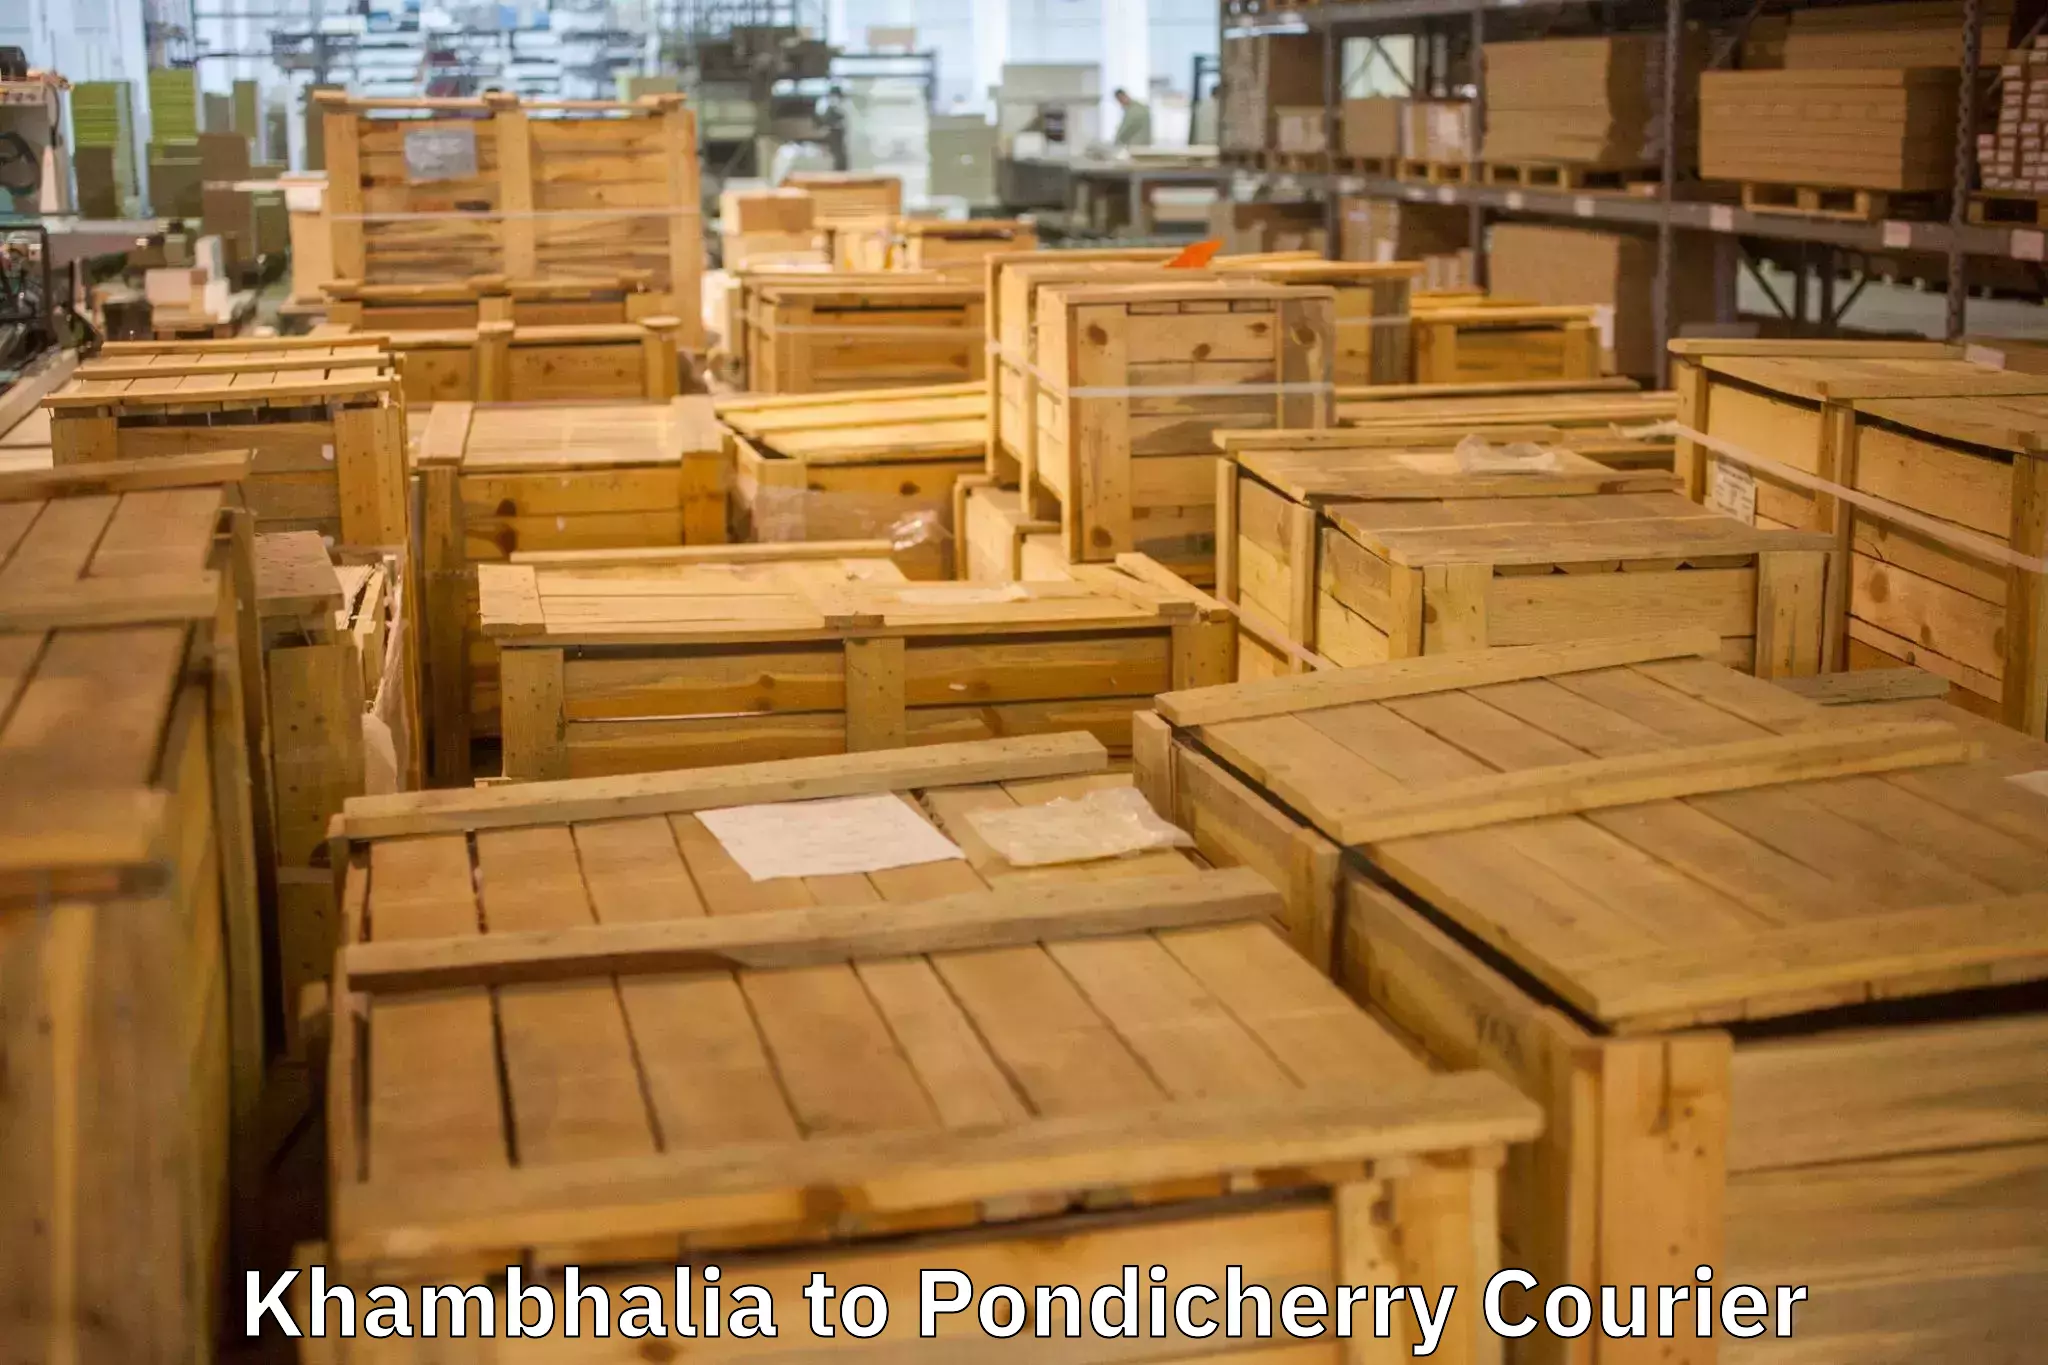 Quality moving and storage in Khambhalia to Pondicherry